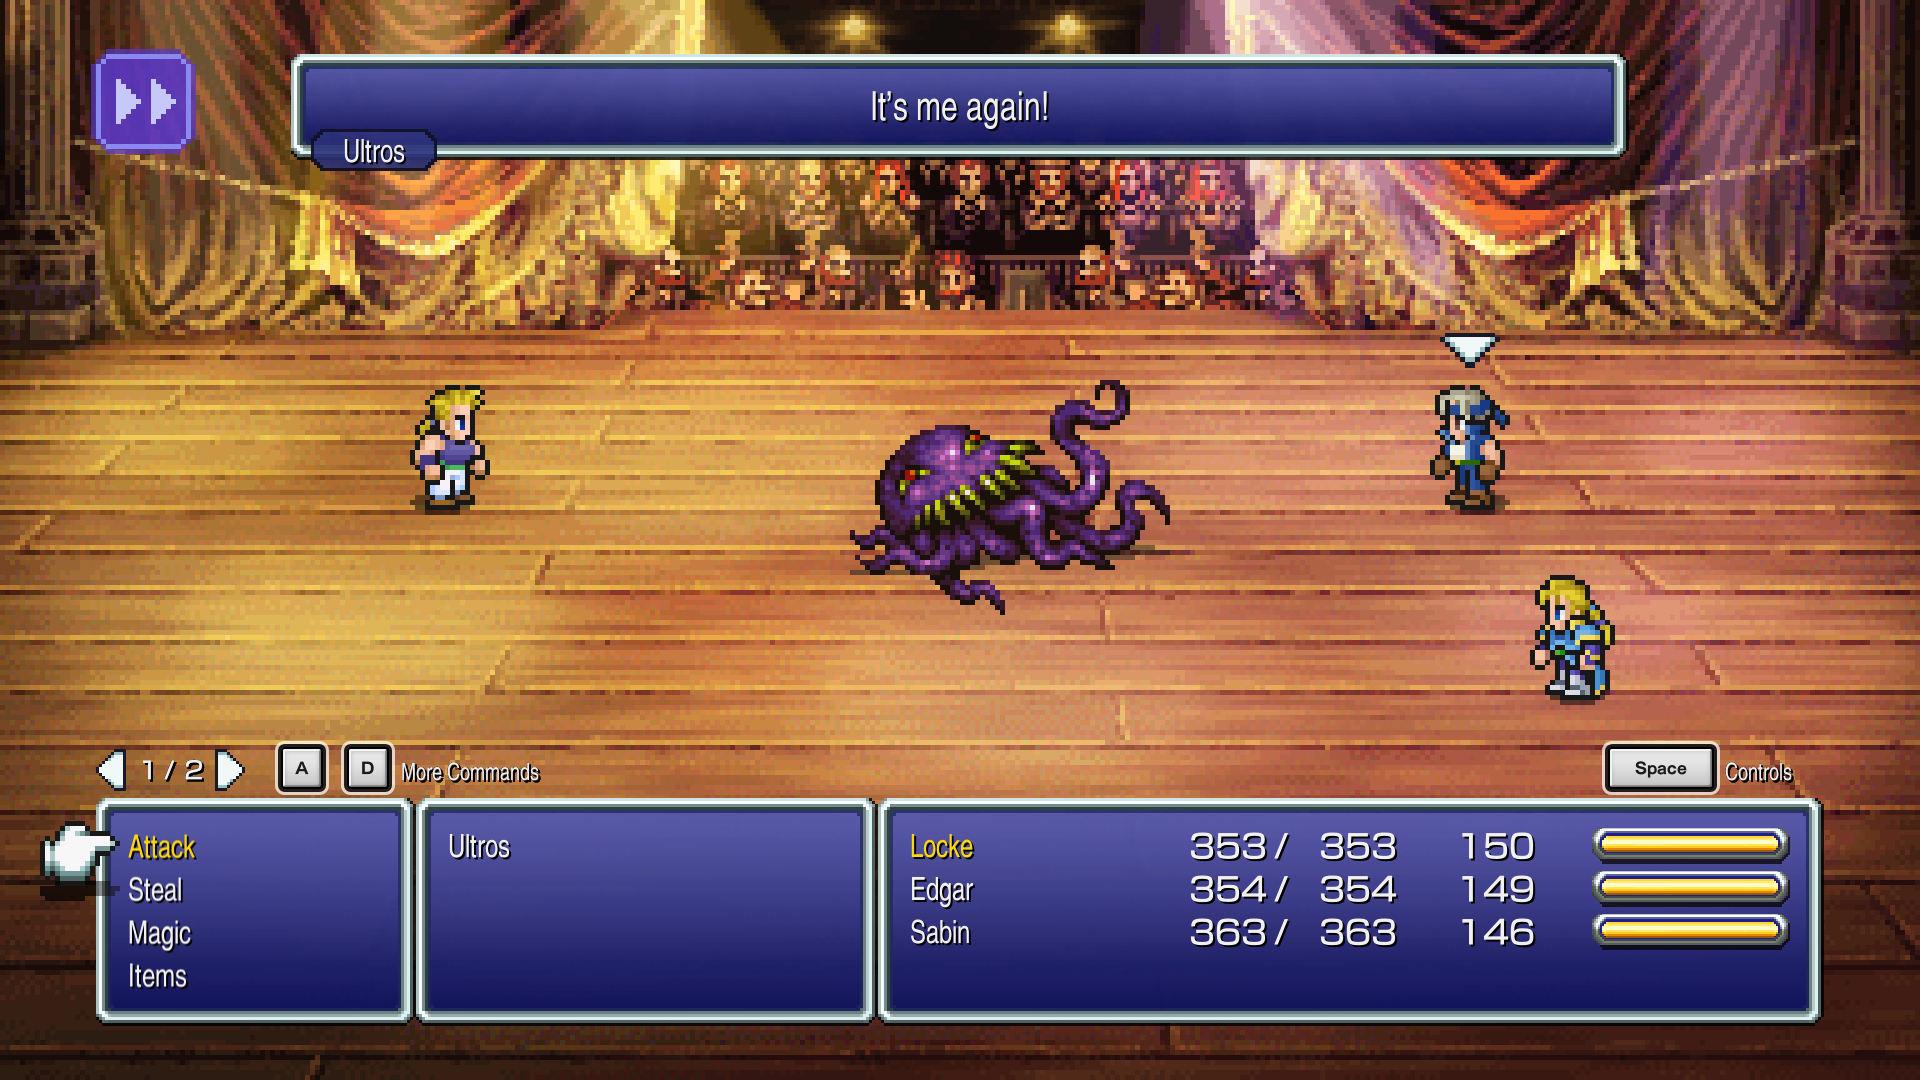 Final Fantasy Pixel Remaster - Review